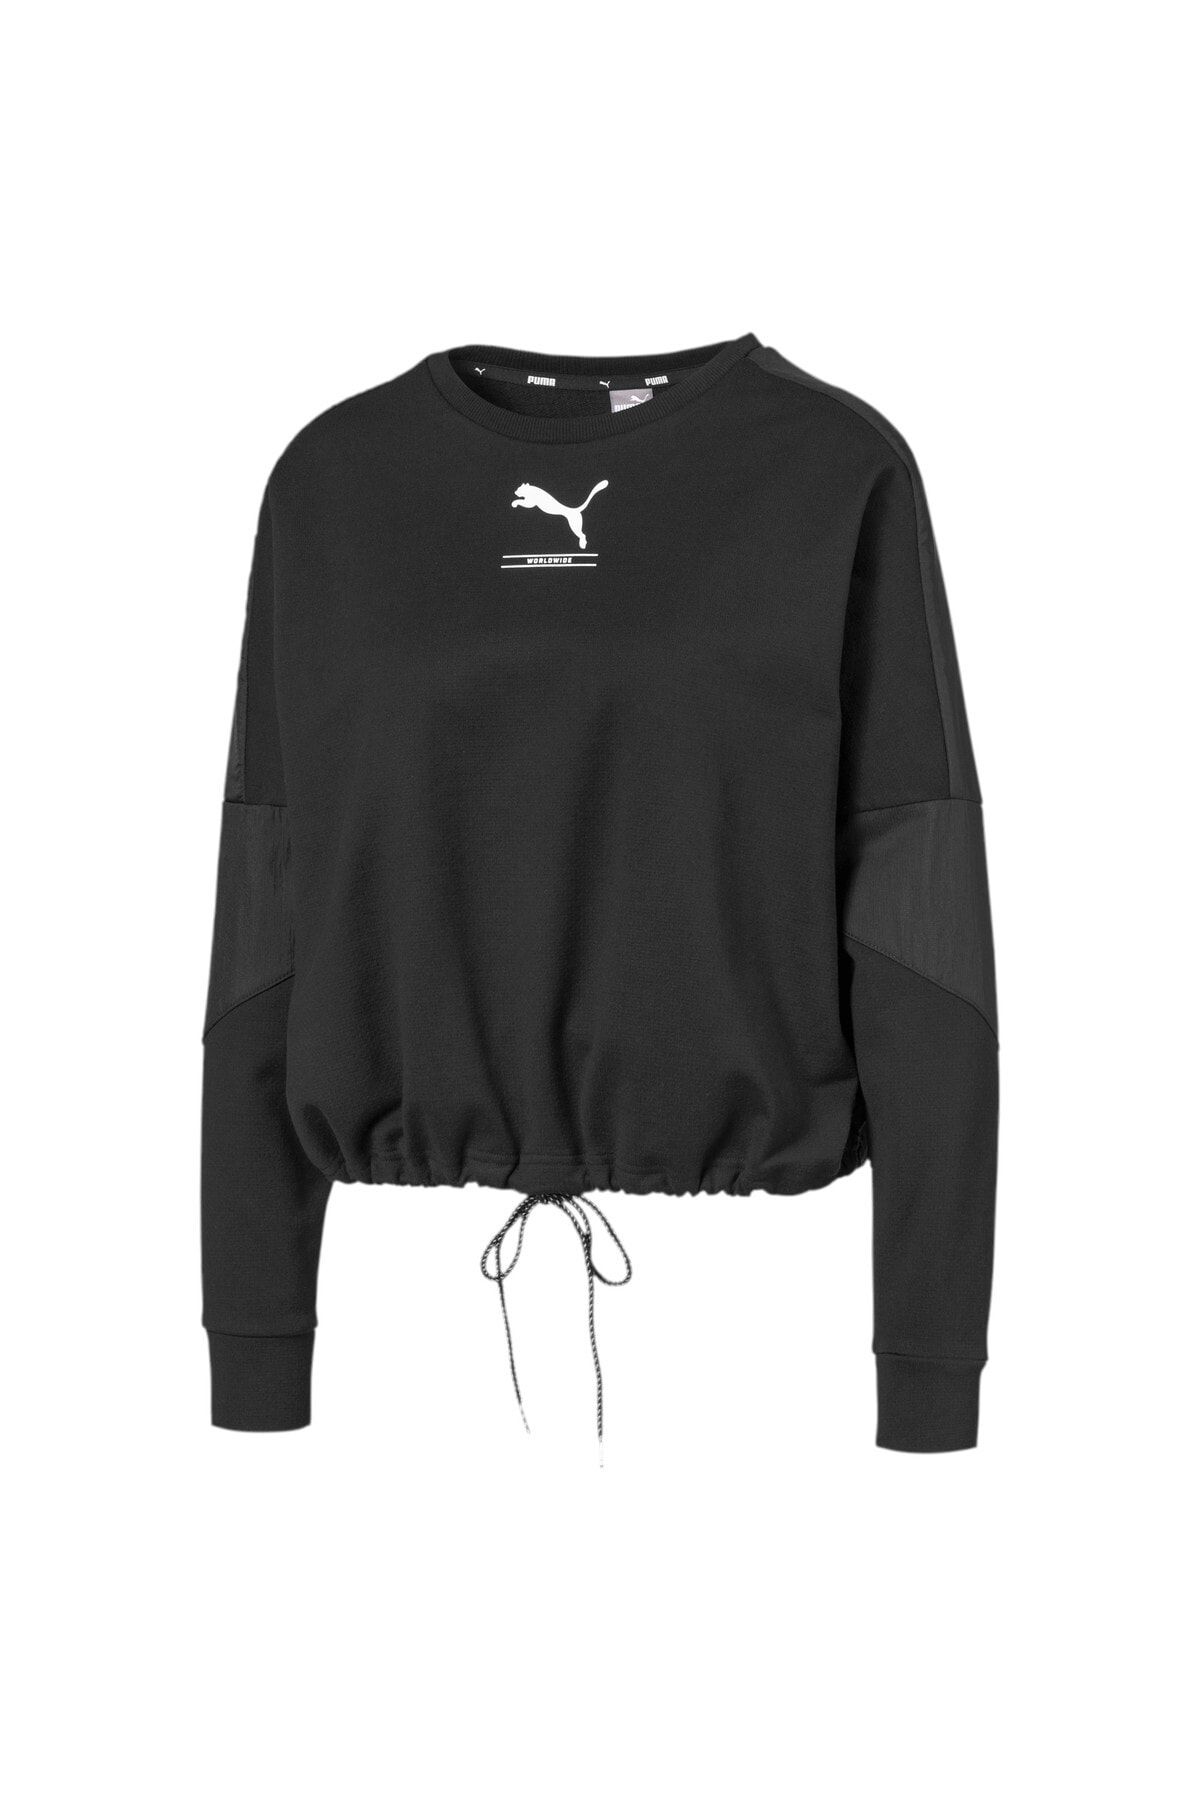 Puma Kadın Spor Sweatshirt - NU-TILITY - 58137801